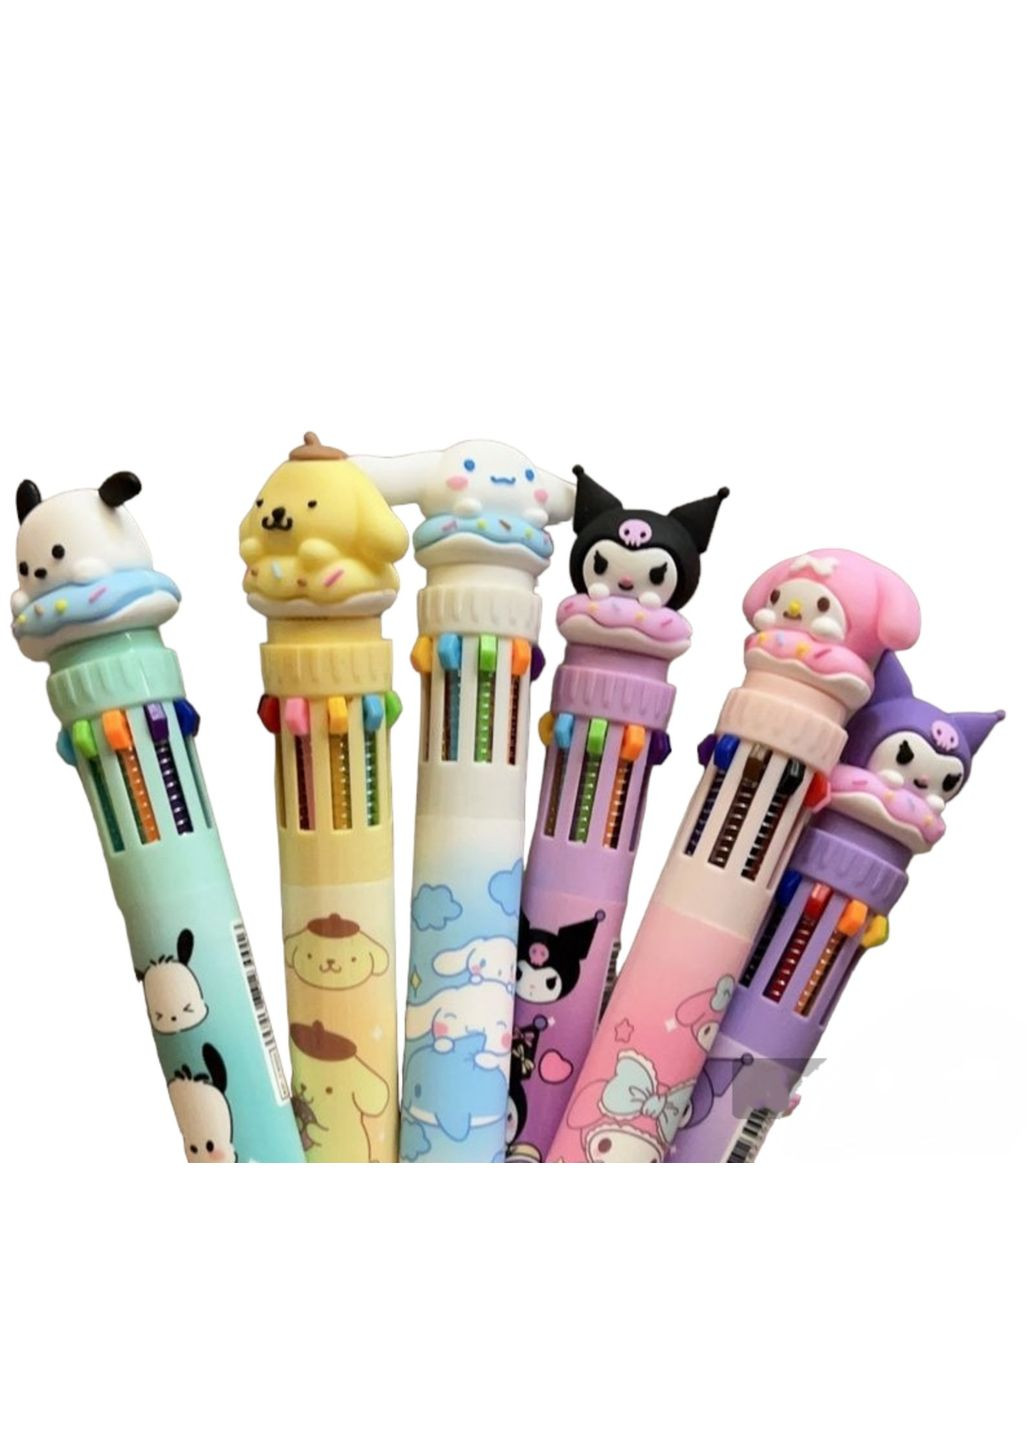 Куроми Санрио Kuromi Sanrio ручка шариковая ручка с рисунком аниме, игрушка в подарок черные ушки NECA (280258070)